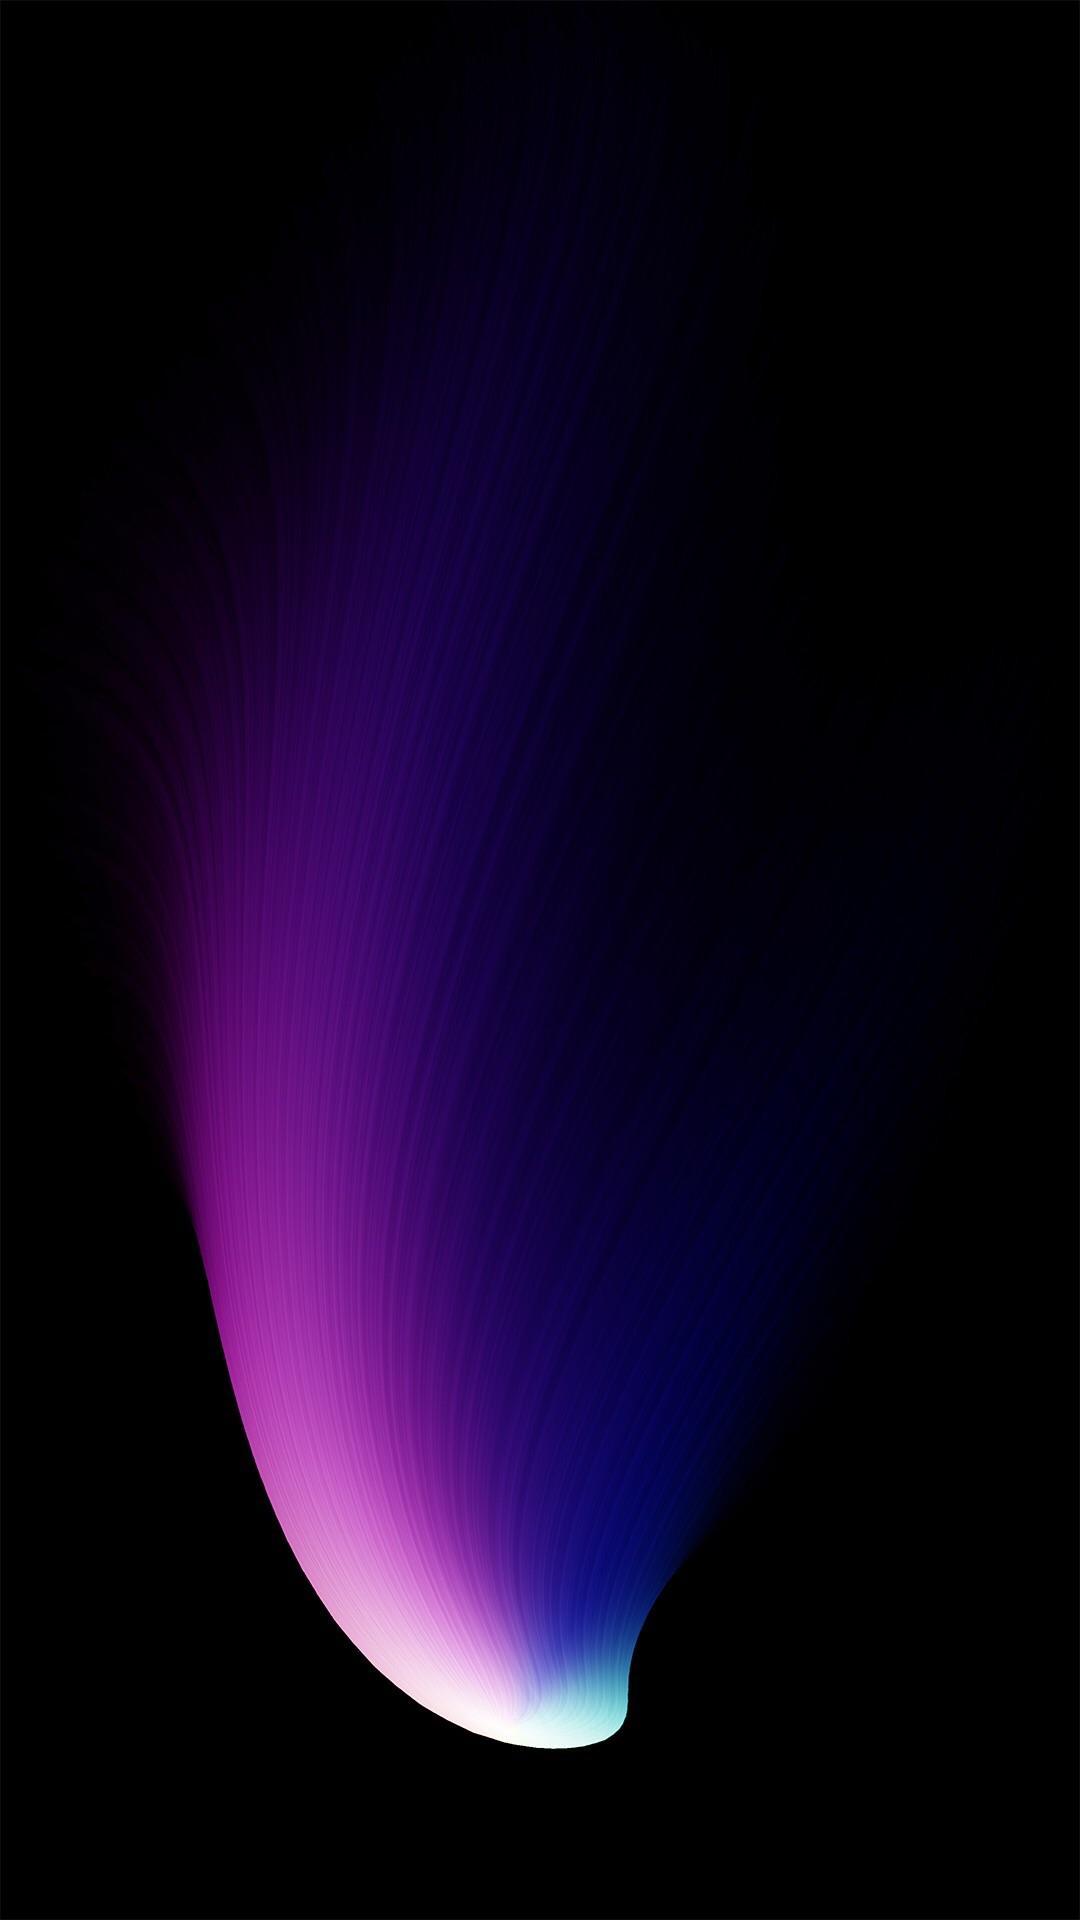 Cool gradient effect wallpaper when waking iPhone X